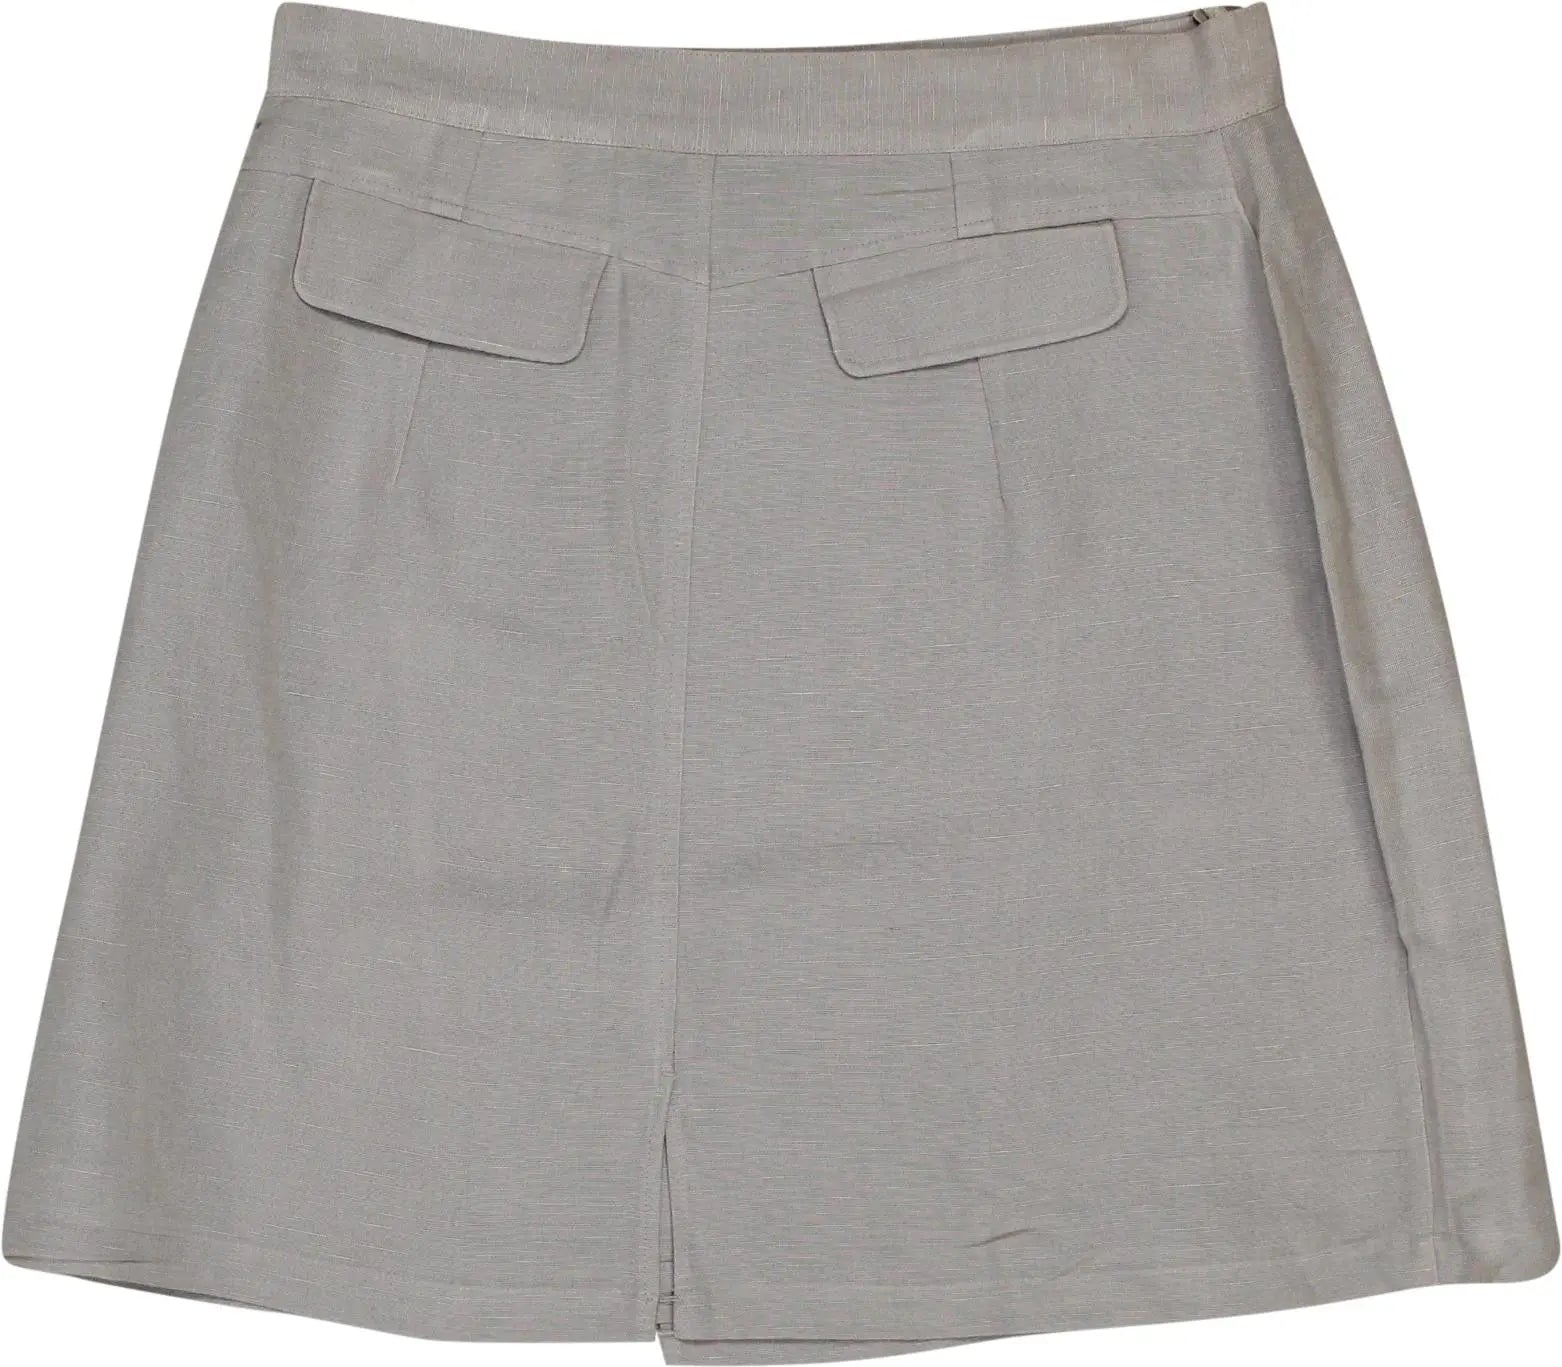 Vivre - Skirt- ThriftTale.com - Vintage and second handclothing